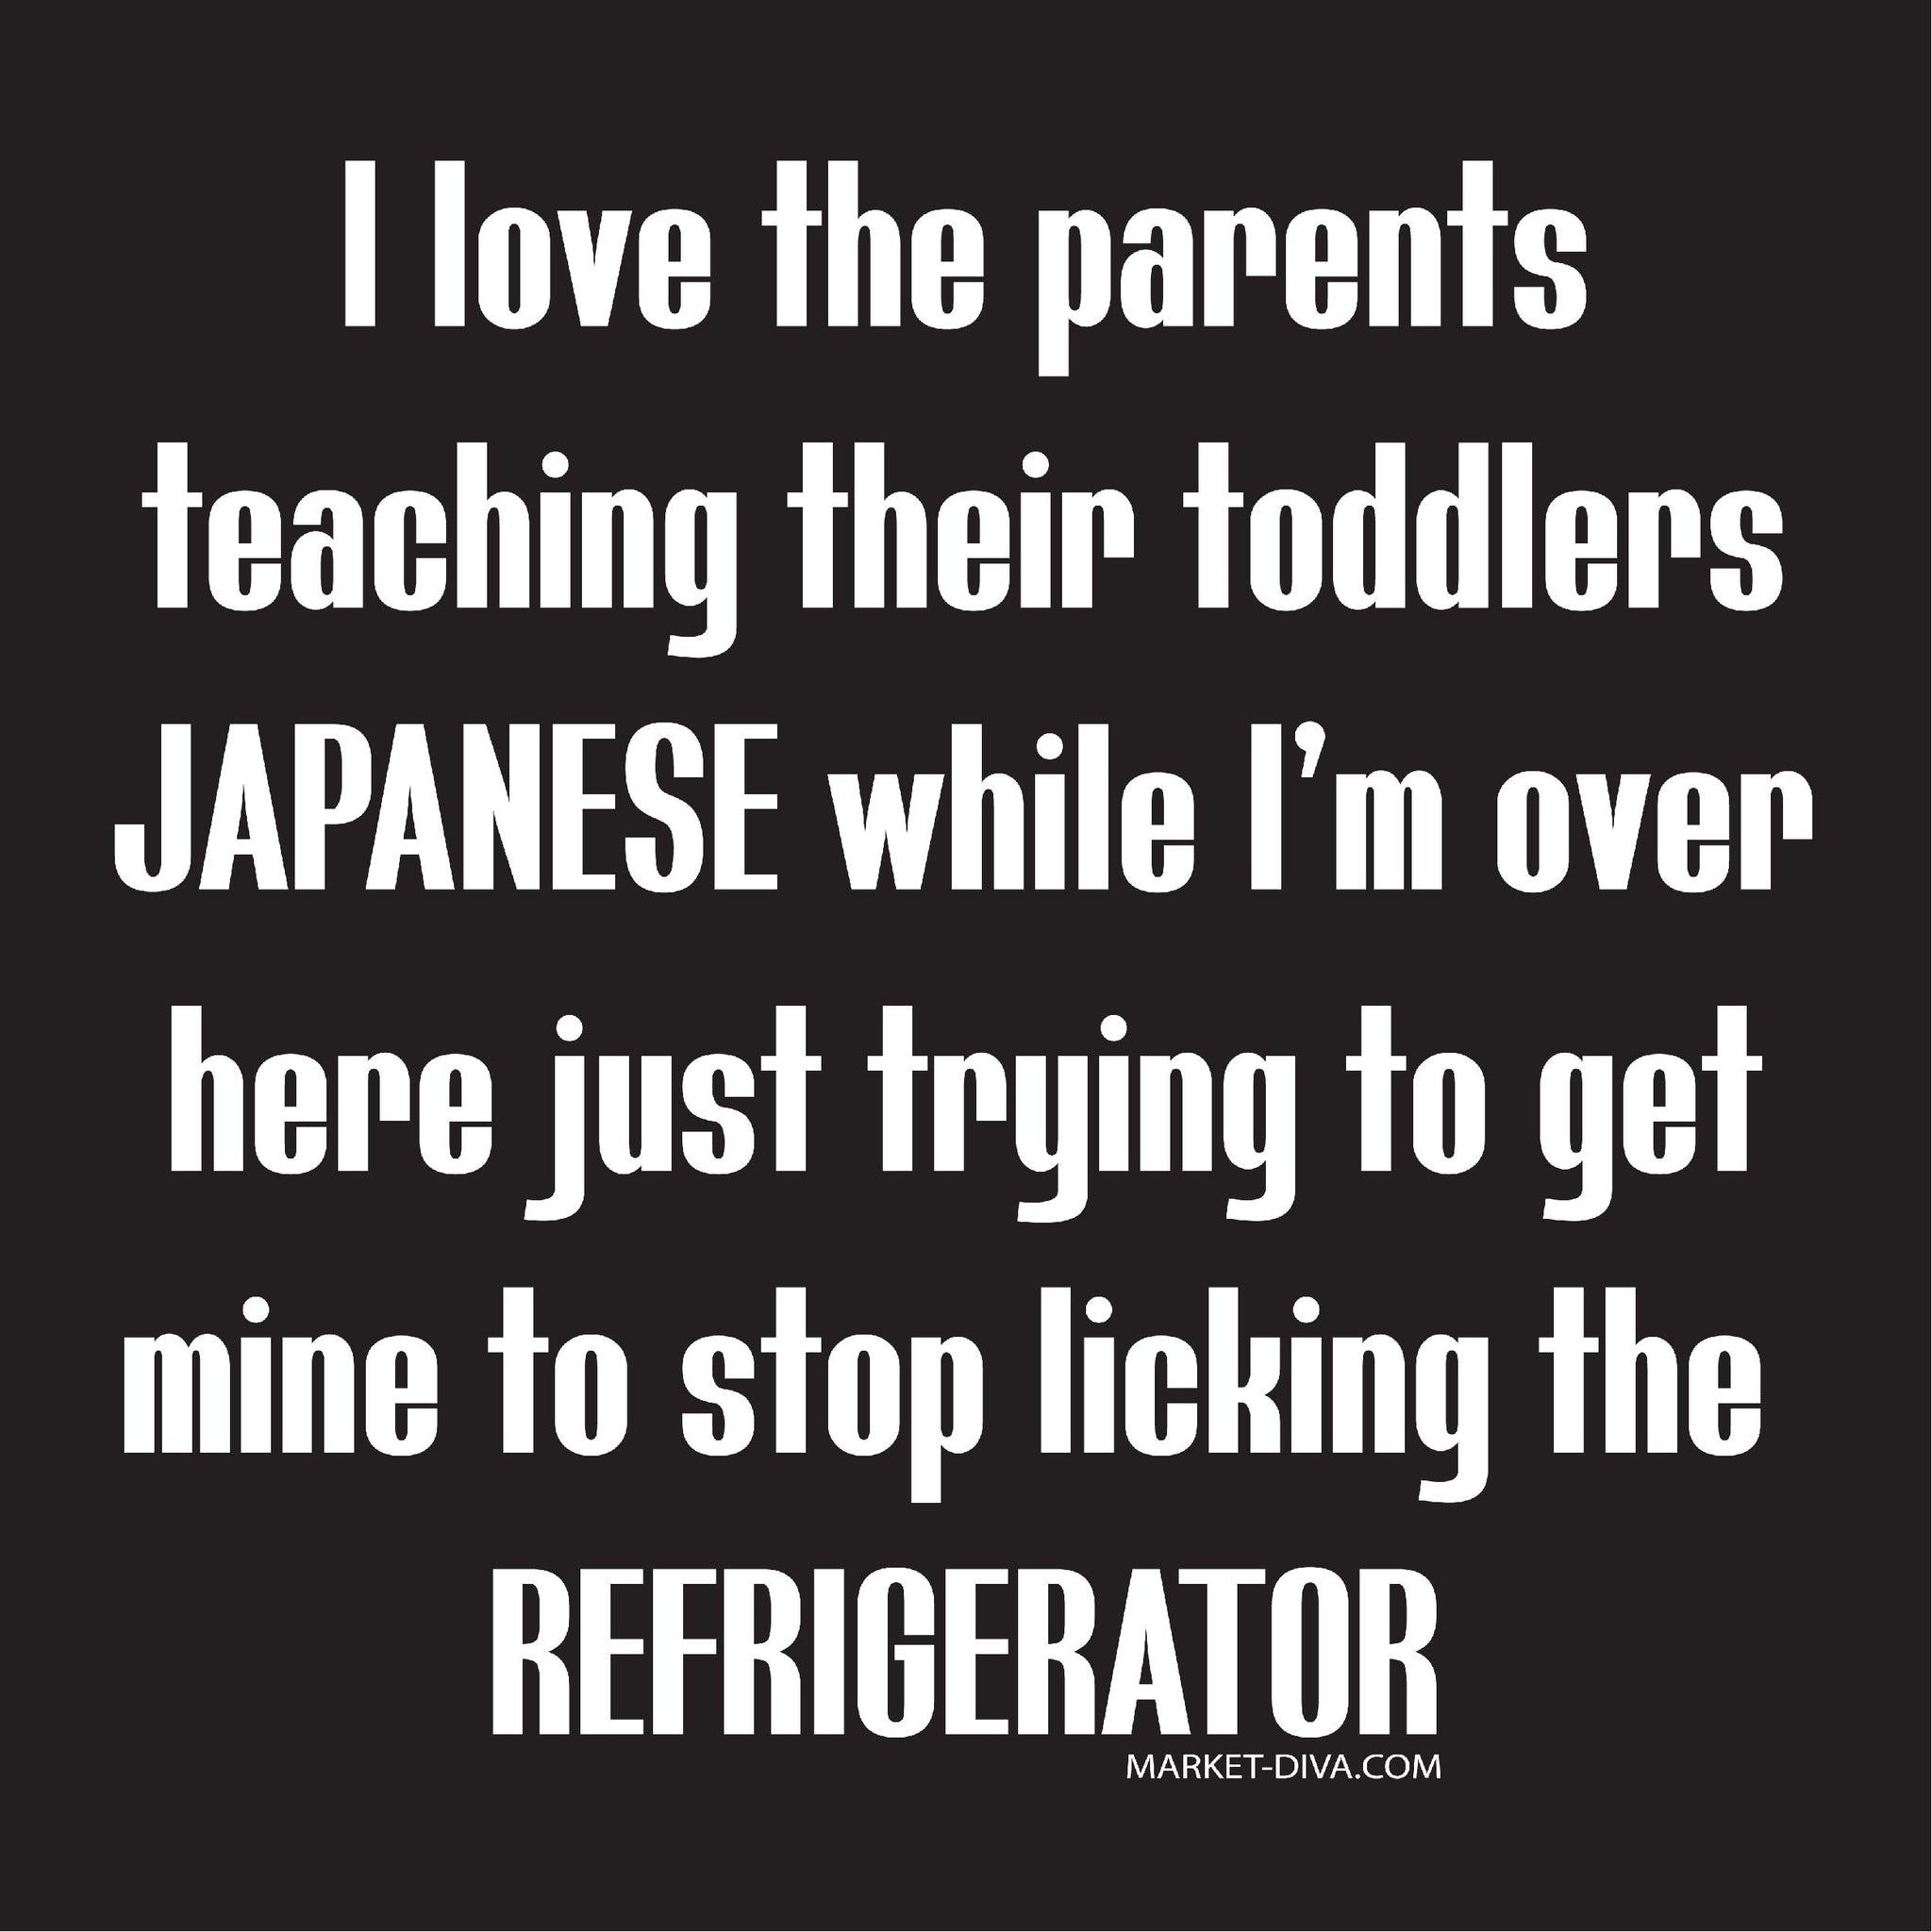 Some Teaching Japanese, I'm Stopping Licking Refrigerator